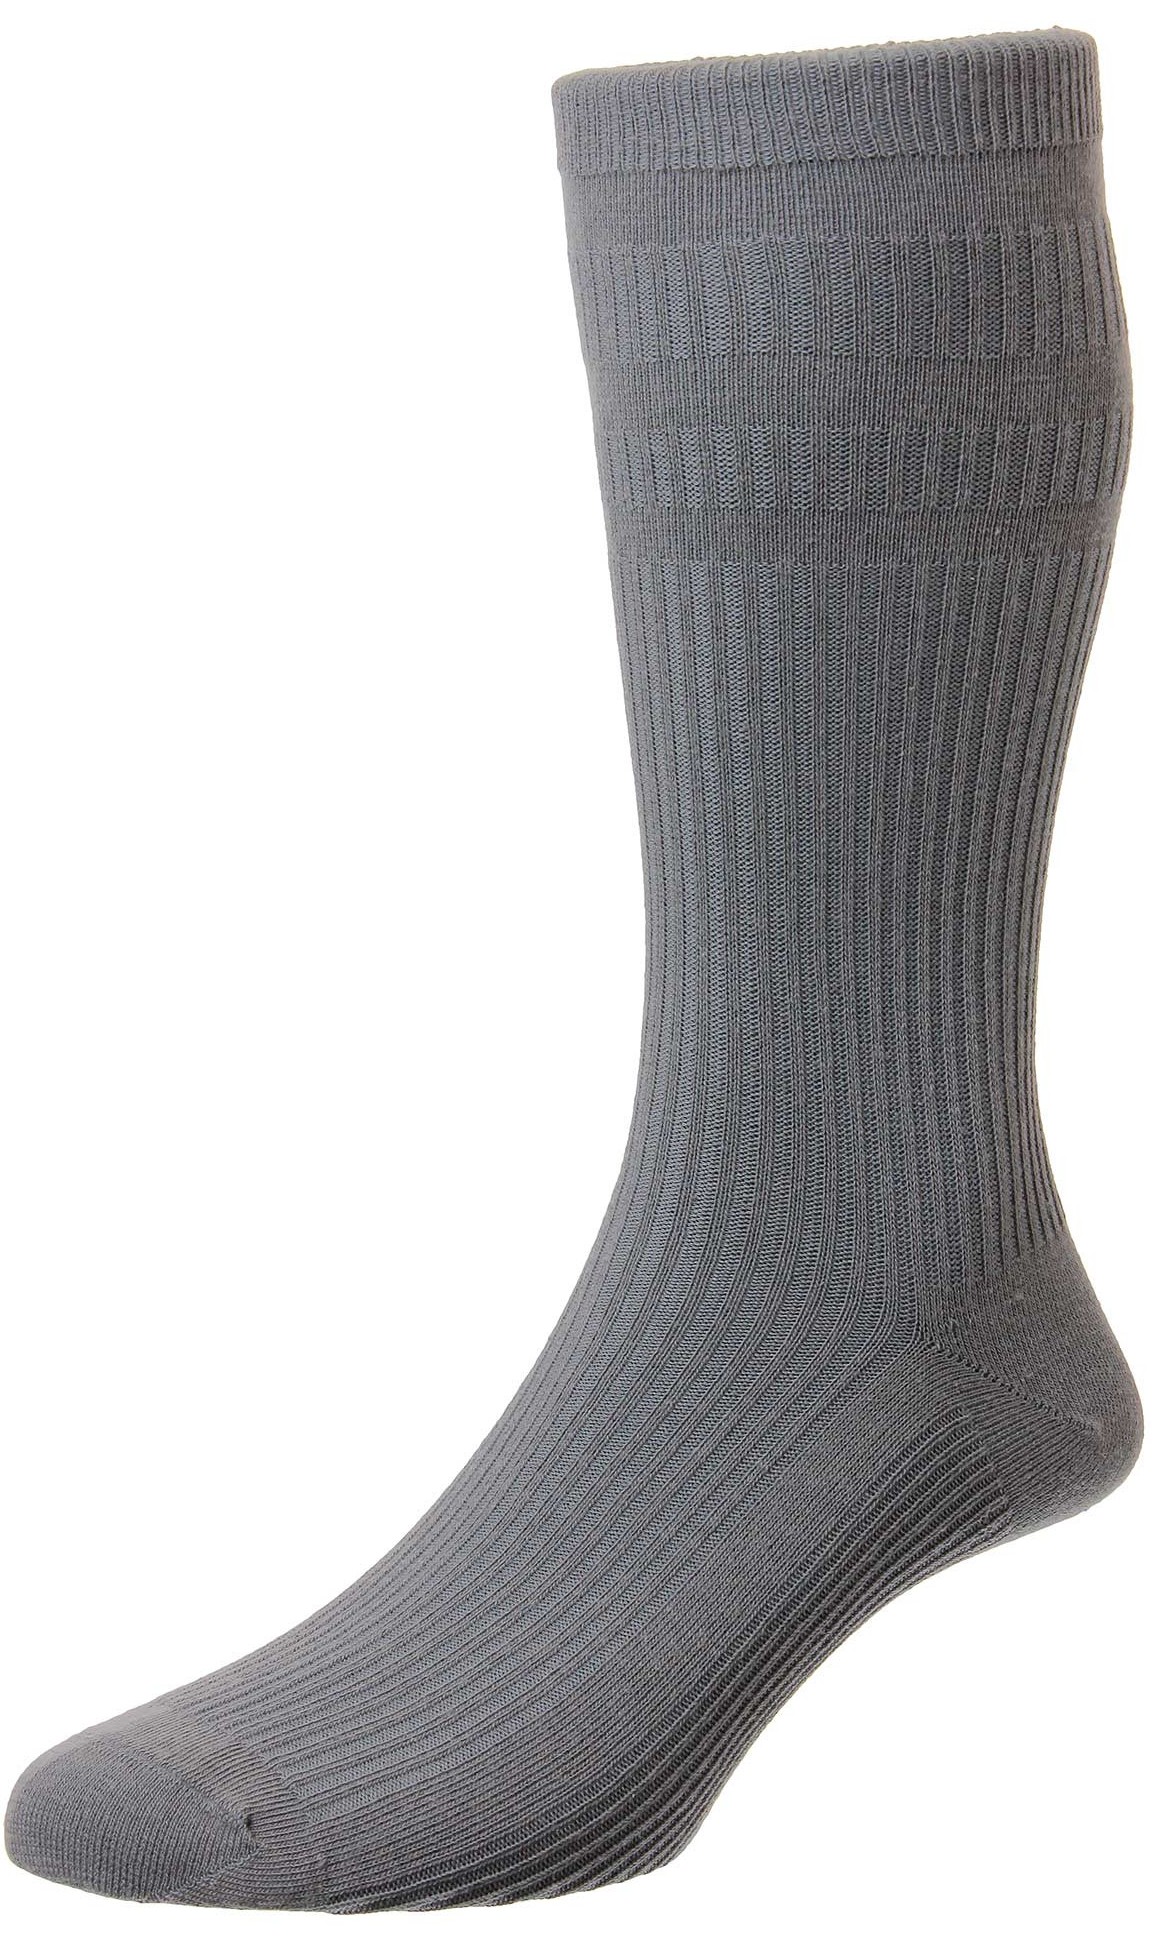 HJ191 Softop Socks Mid Grey Shoe size 11-13